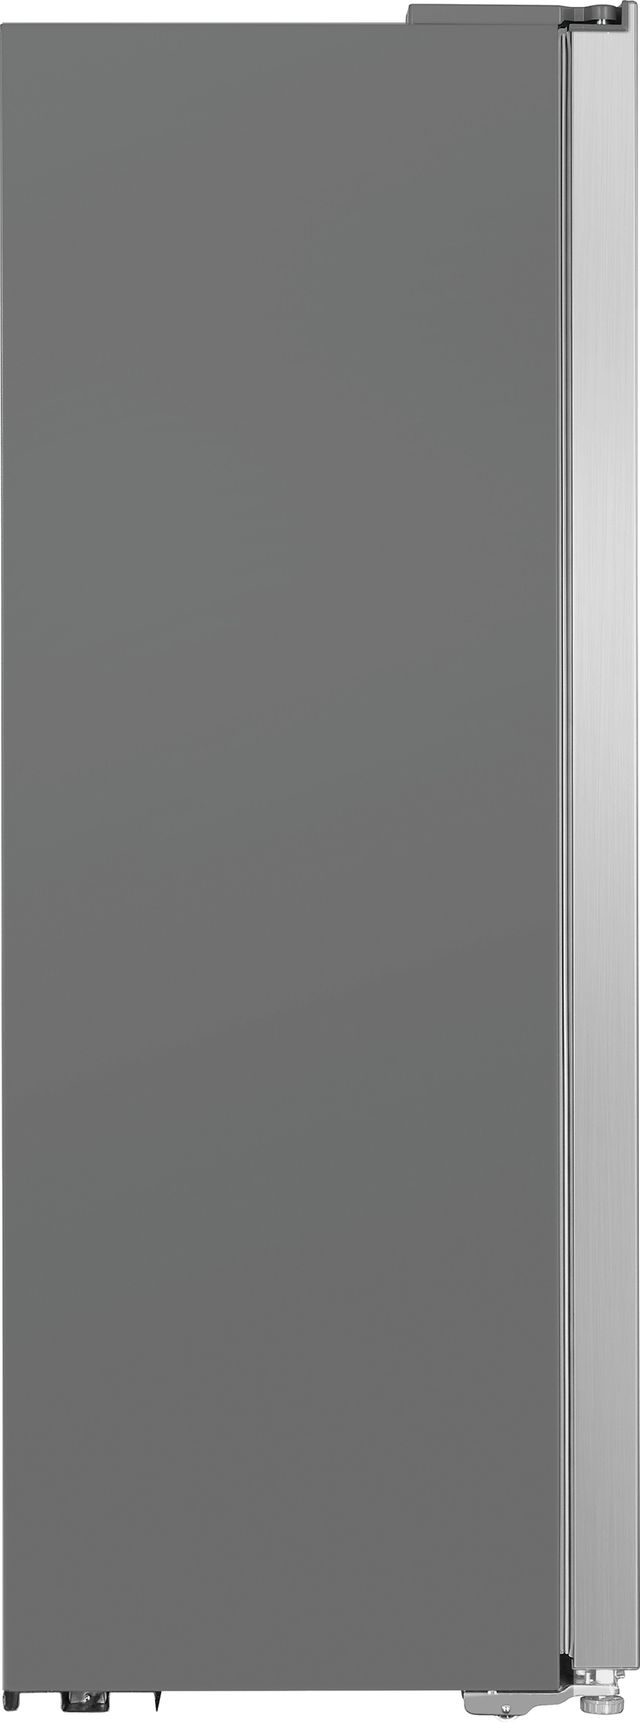 Frigidaire® 18.8 Cu. Ft. Brushed Steel Counter Depth Side-by-Side Refrigerator 4